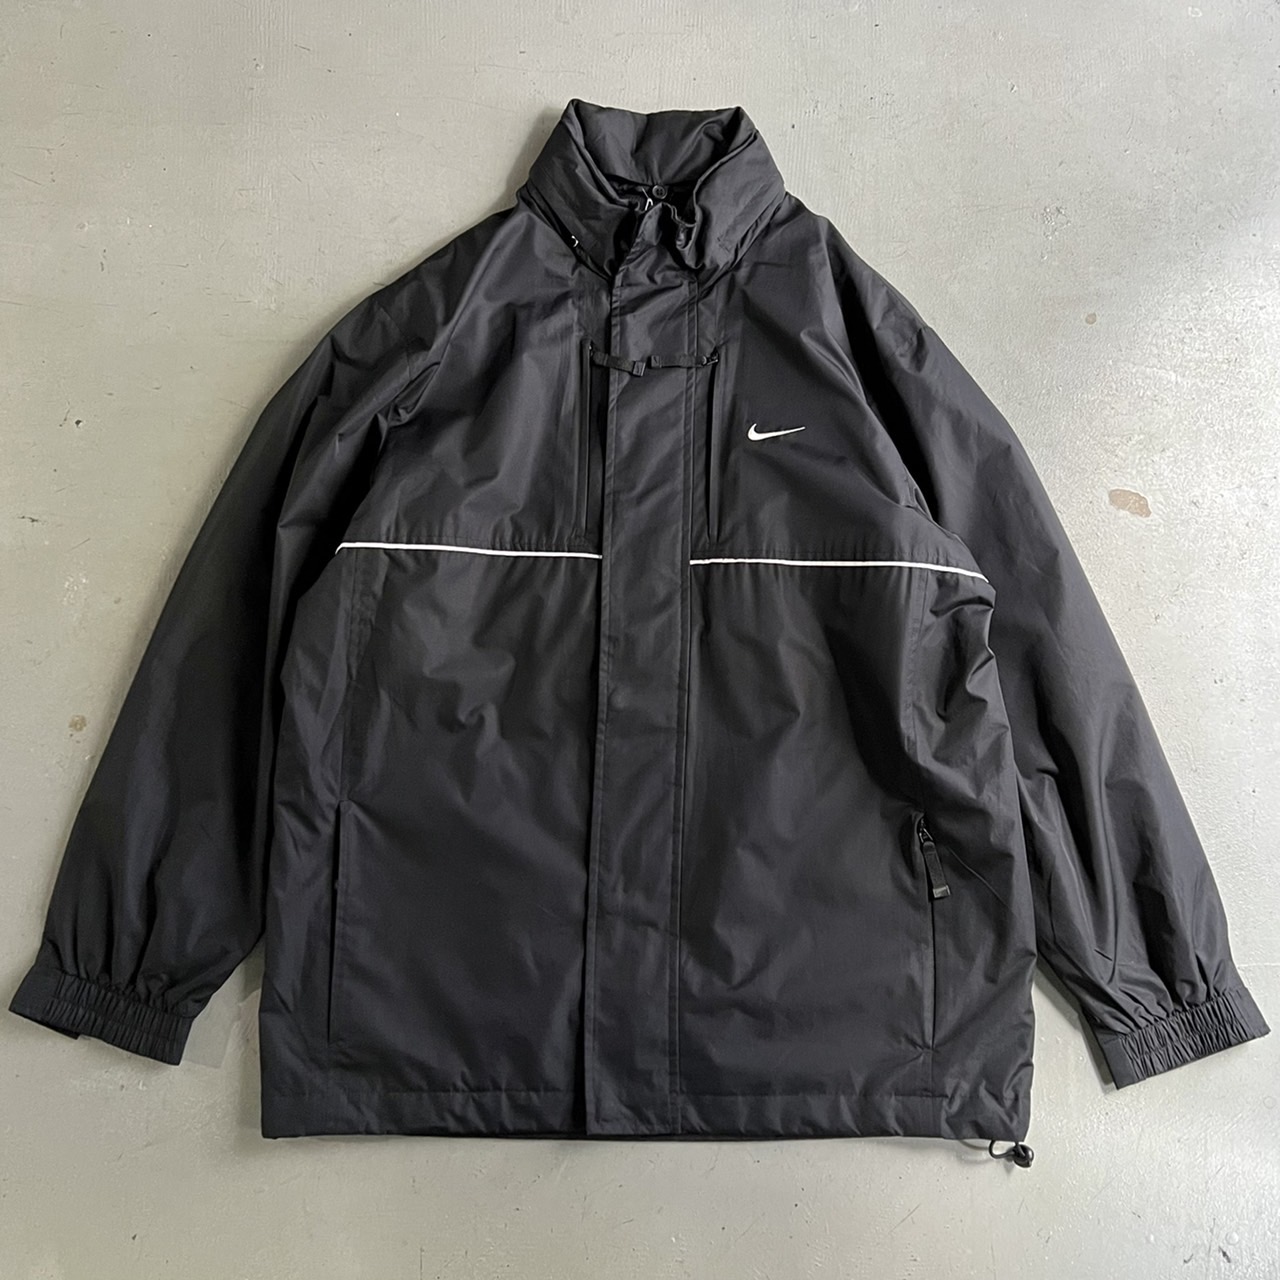 00s NIKE CLIMA-FIT detachable jacket Y2K